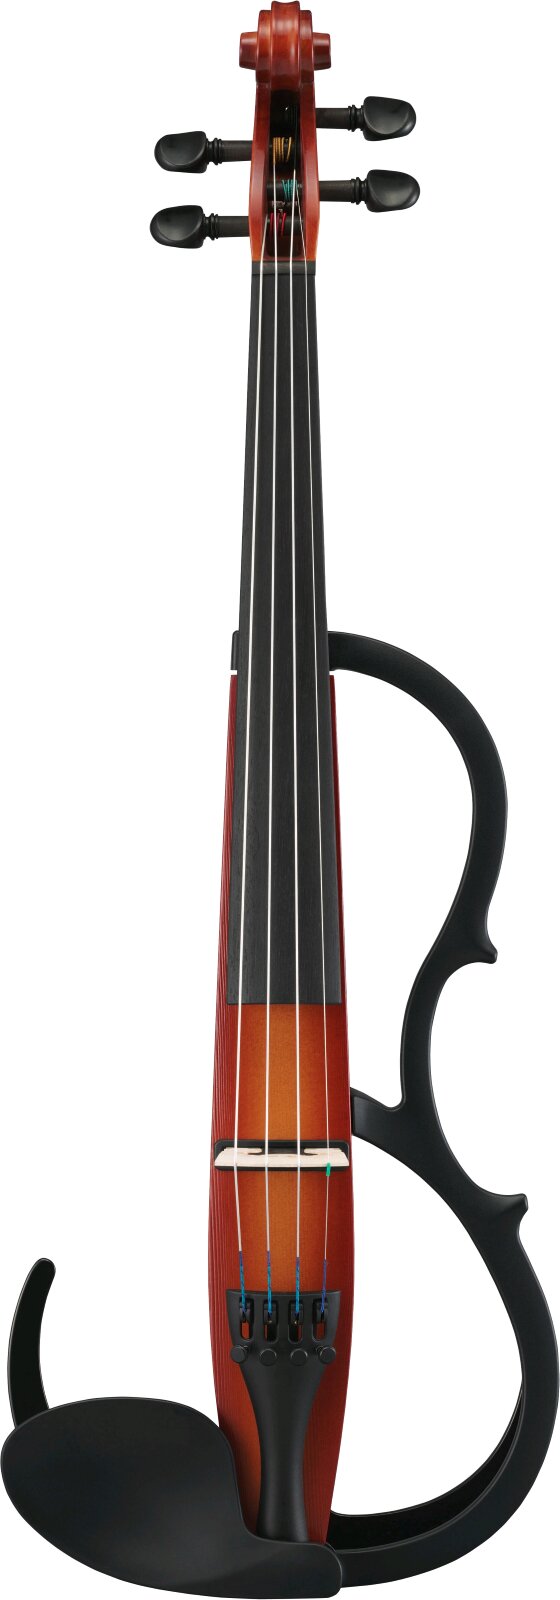 Yamaha SV-250 BR Violin Silent brown : photo 1